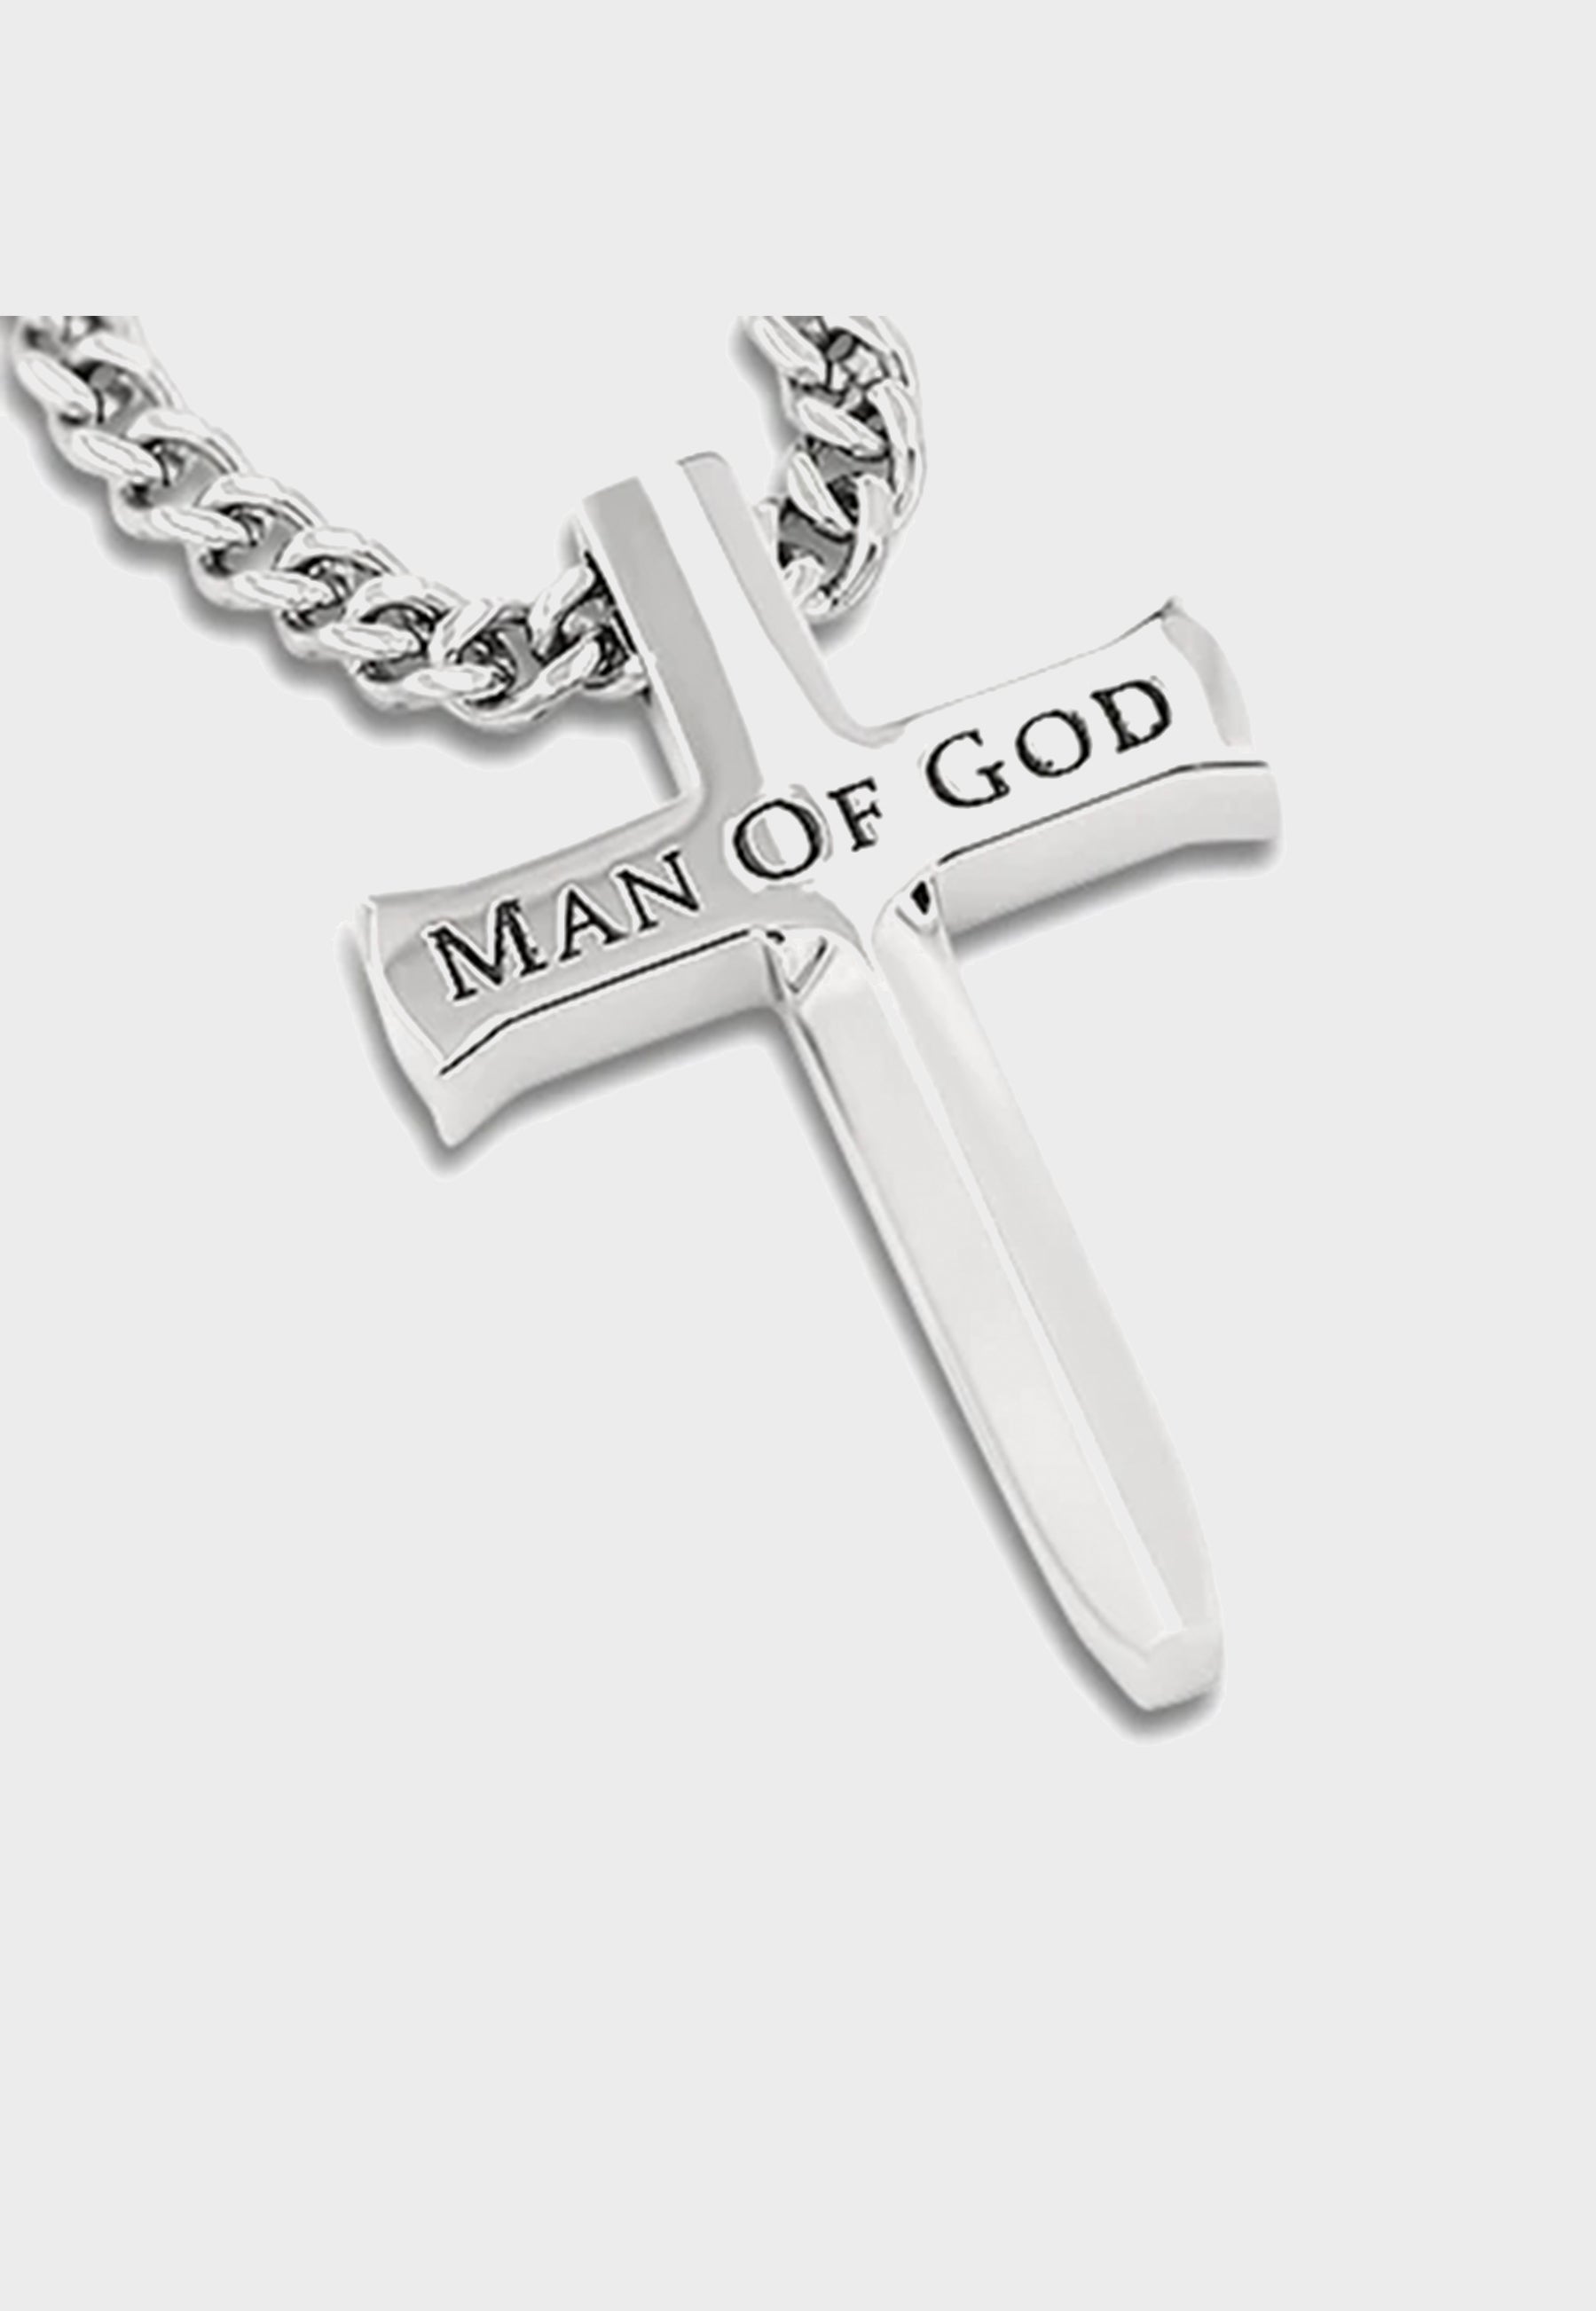 Man of God Christian cross men's necklace